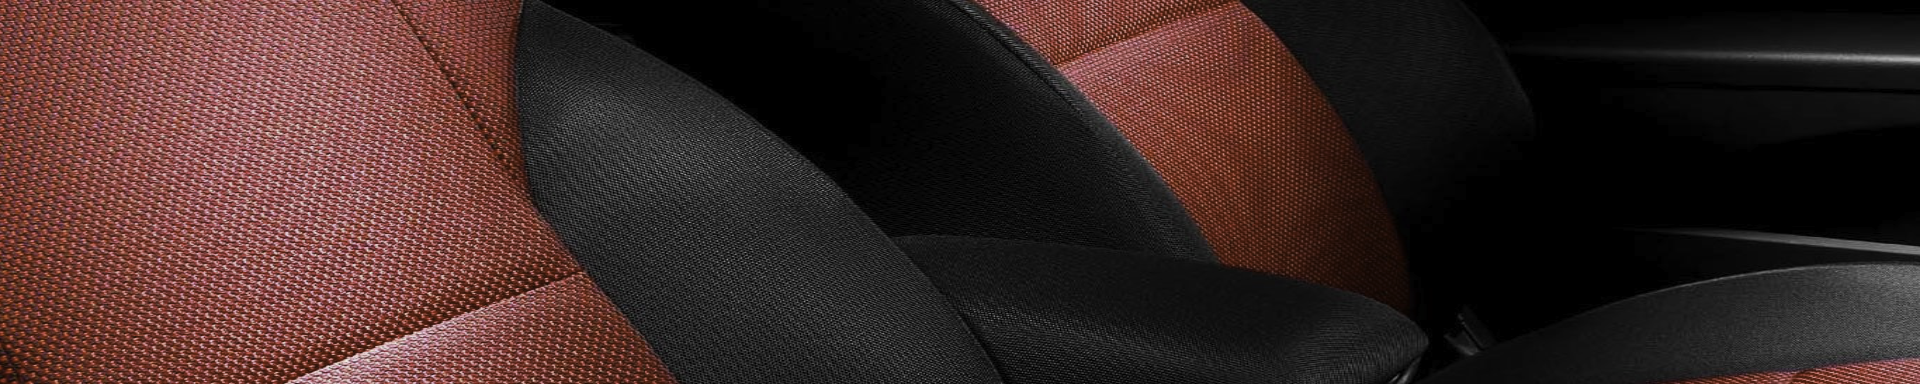 Custom Car Seat Covers | GarageAndFab.com | Munro Industries gf-1001030511